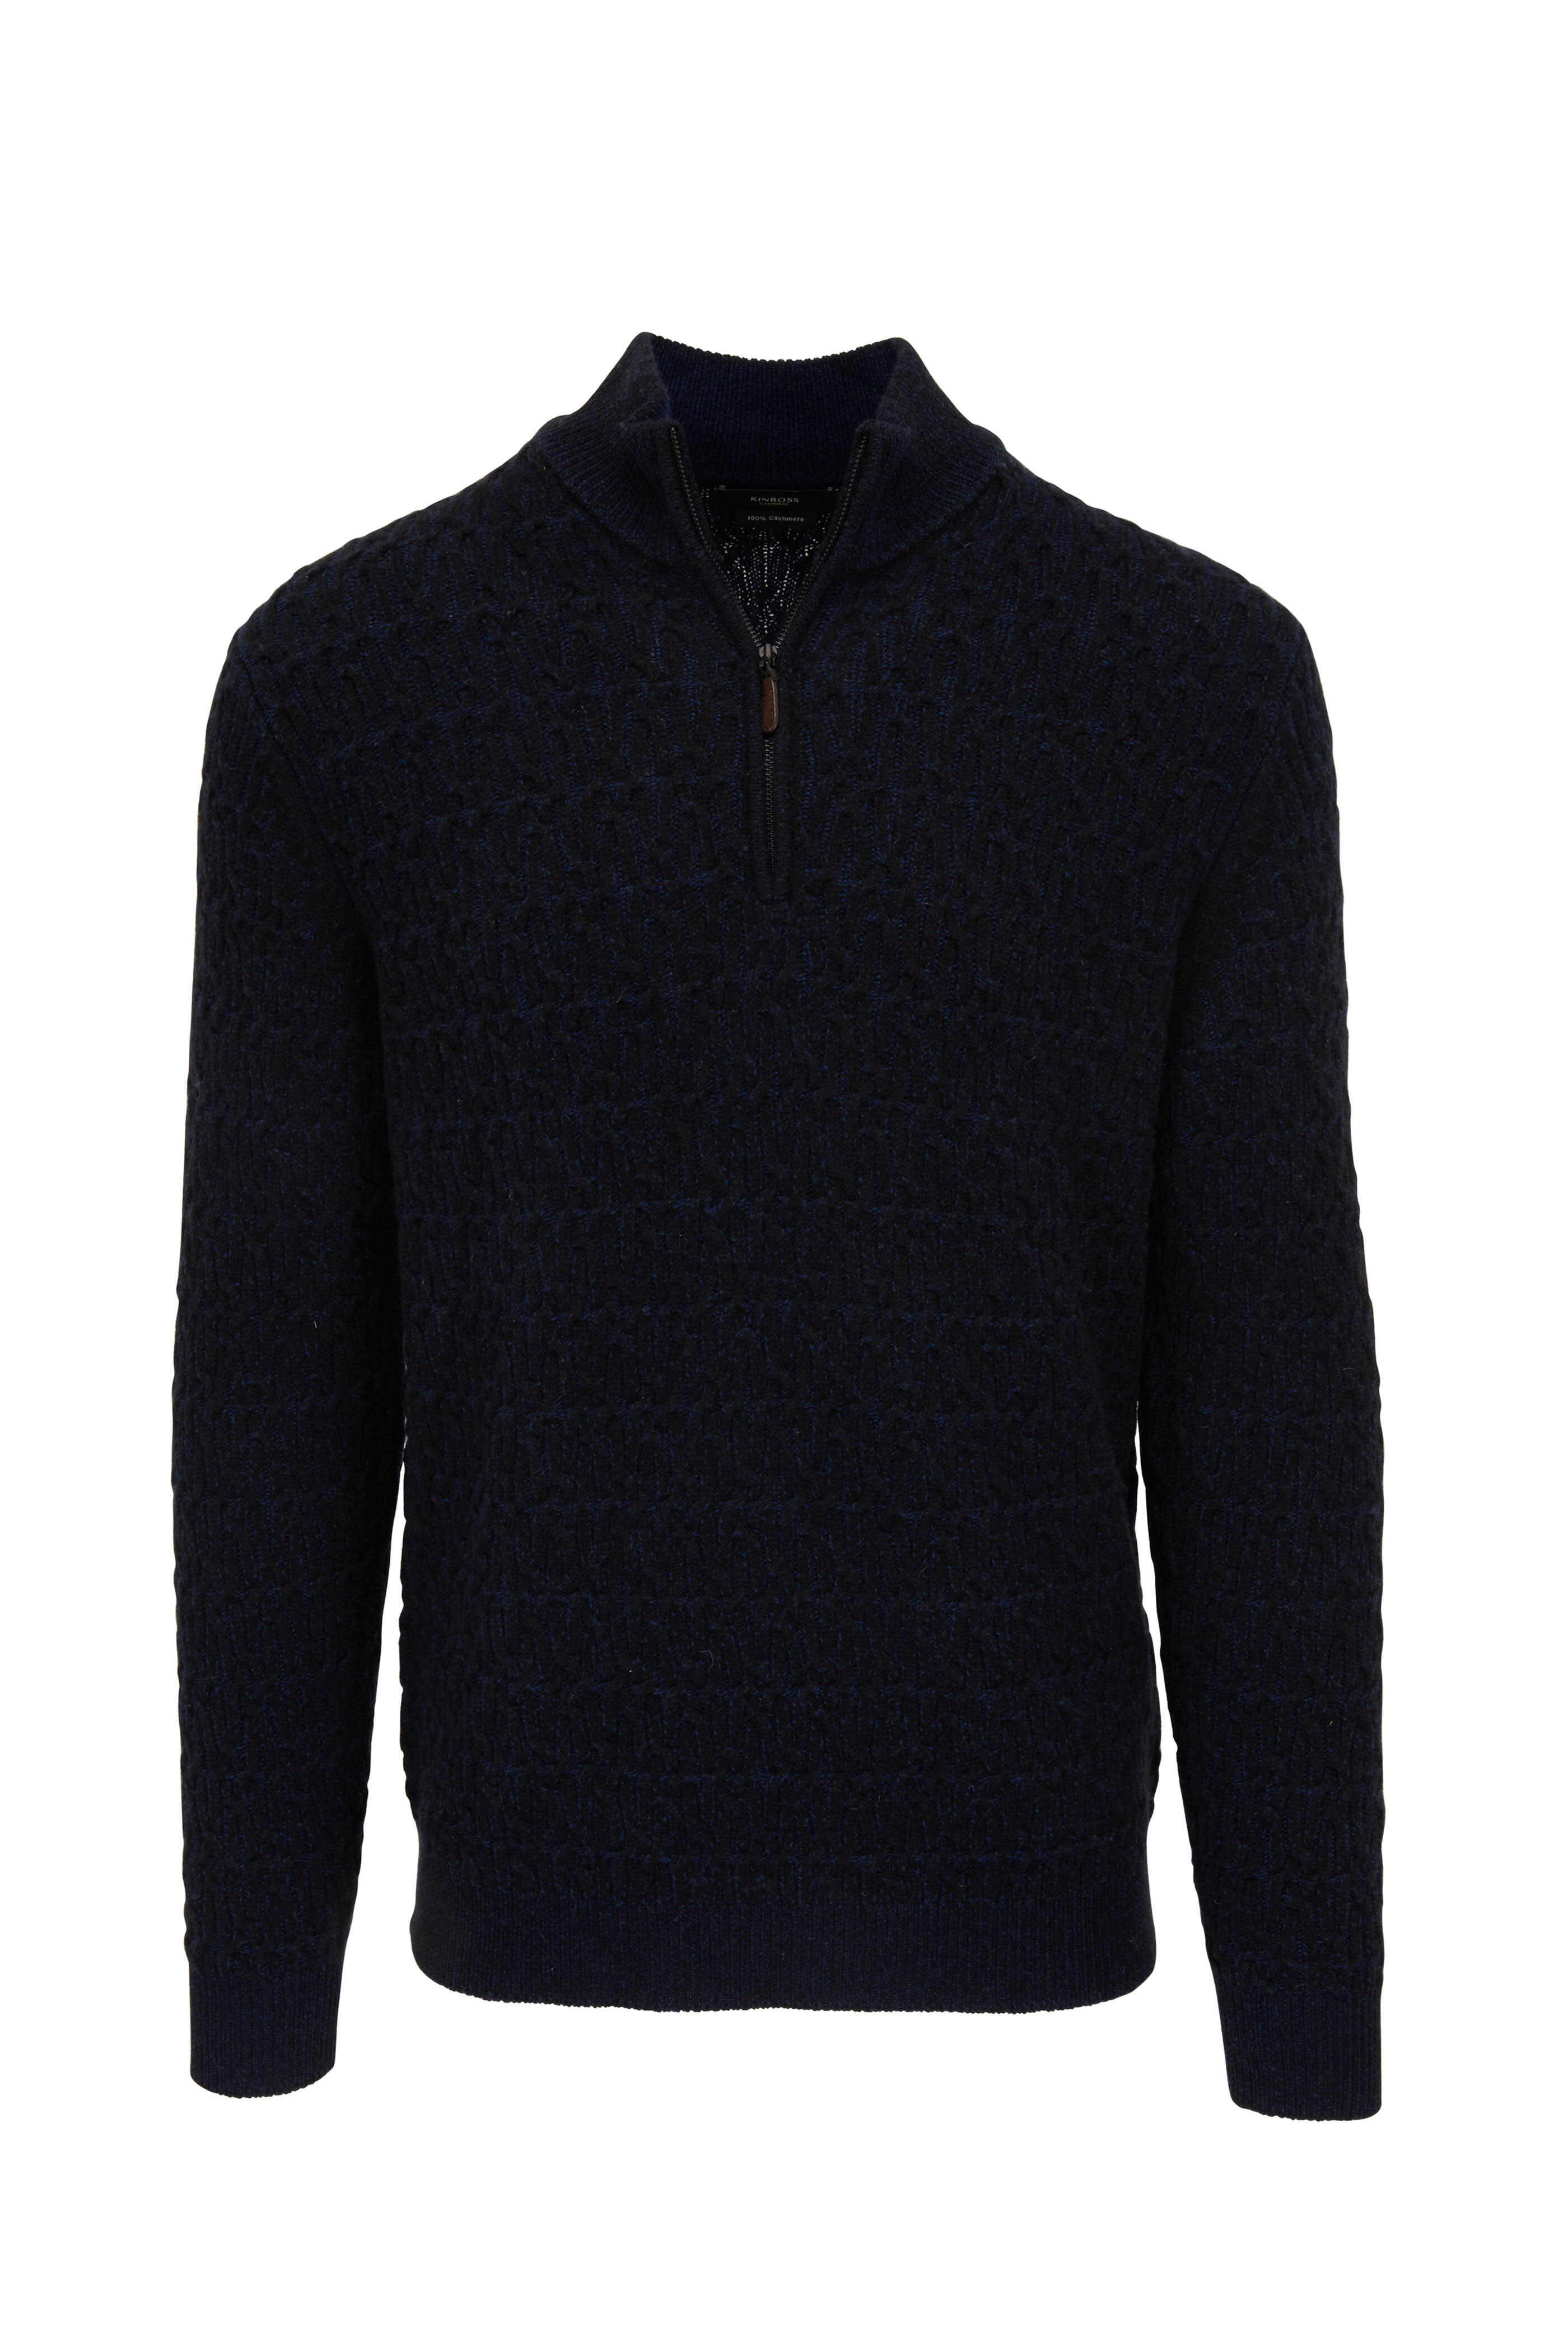 Kinross - Black Plaited Cashmere Quarter Zip Pullover